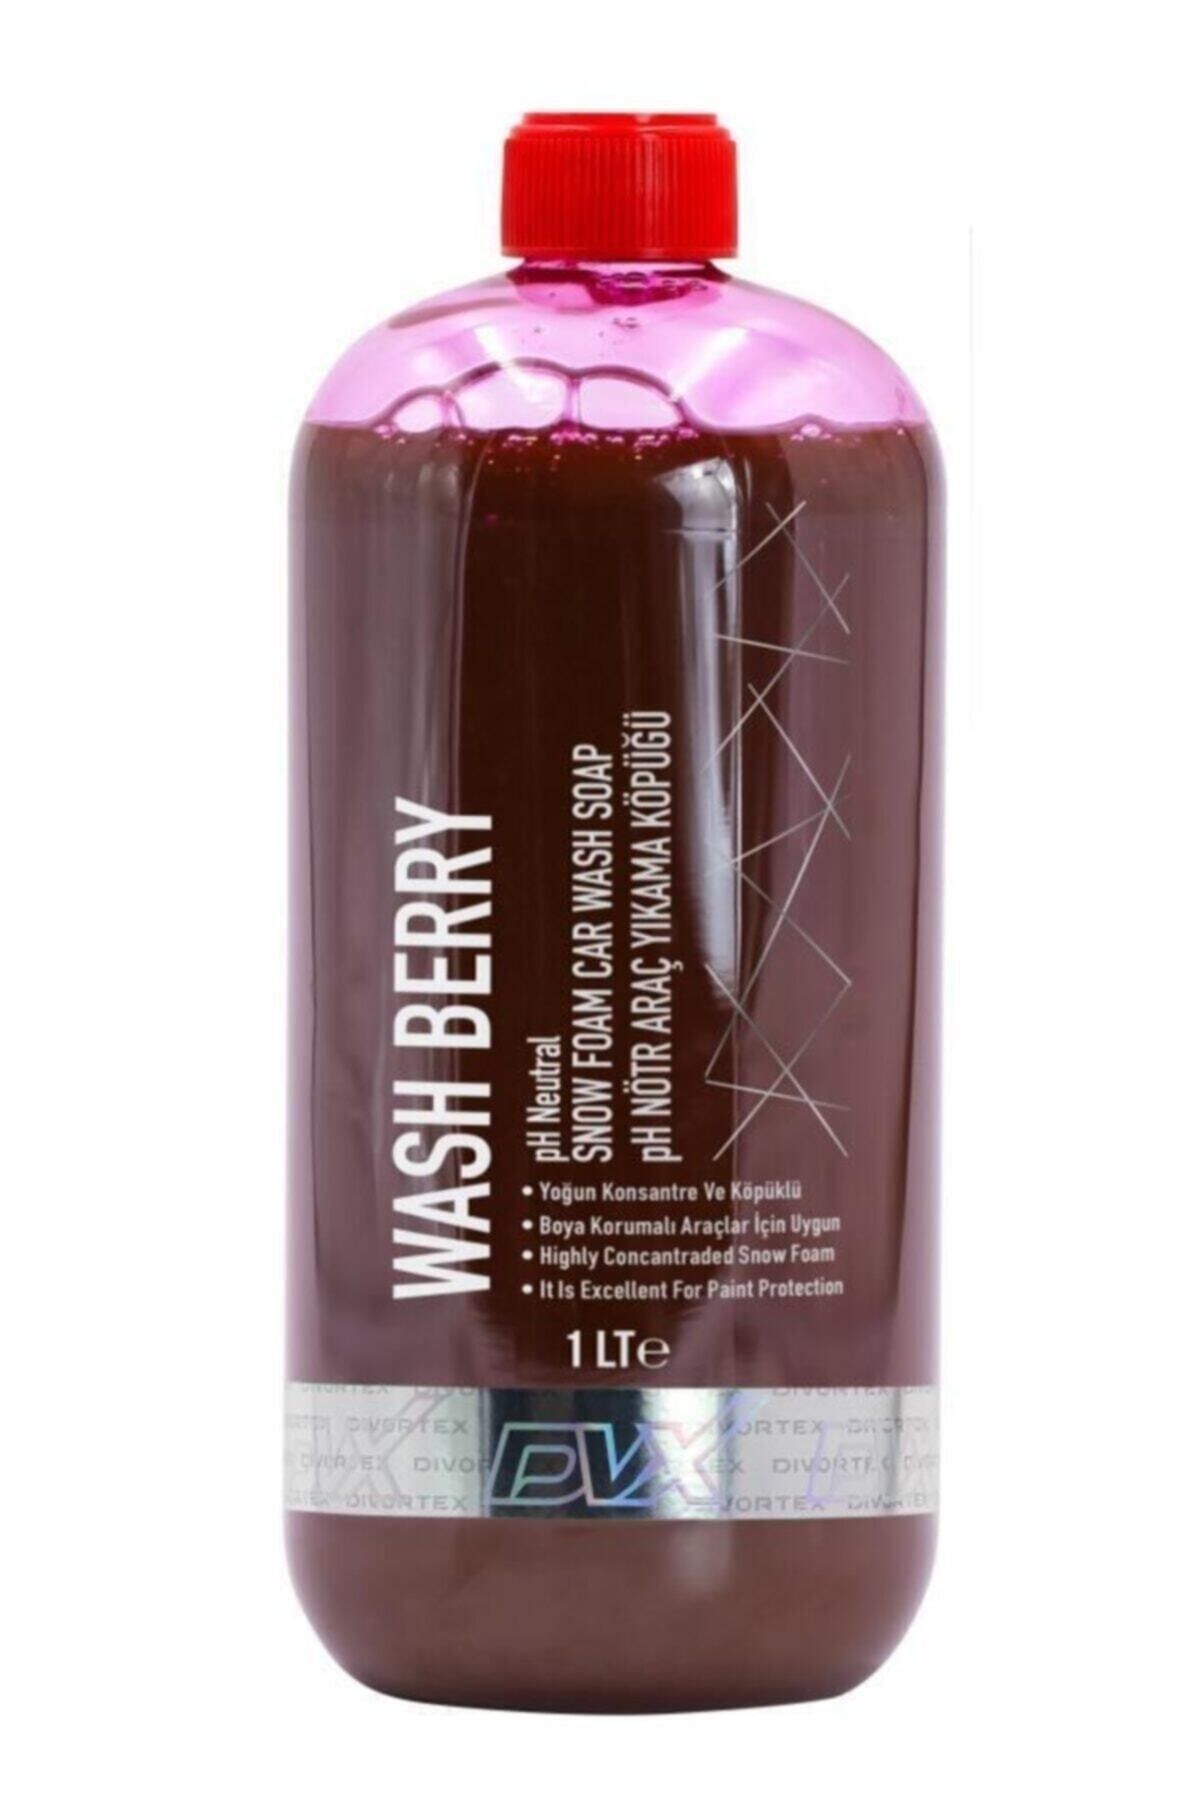 Divortex Dvx Wash Berry Ph Nötr Oto Şampuanı 1 lt